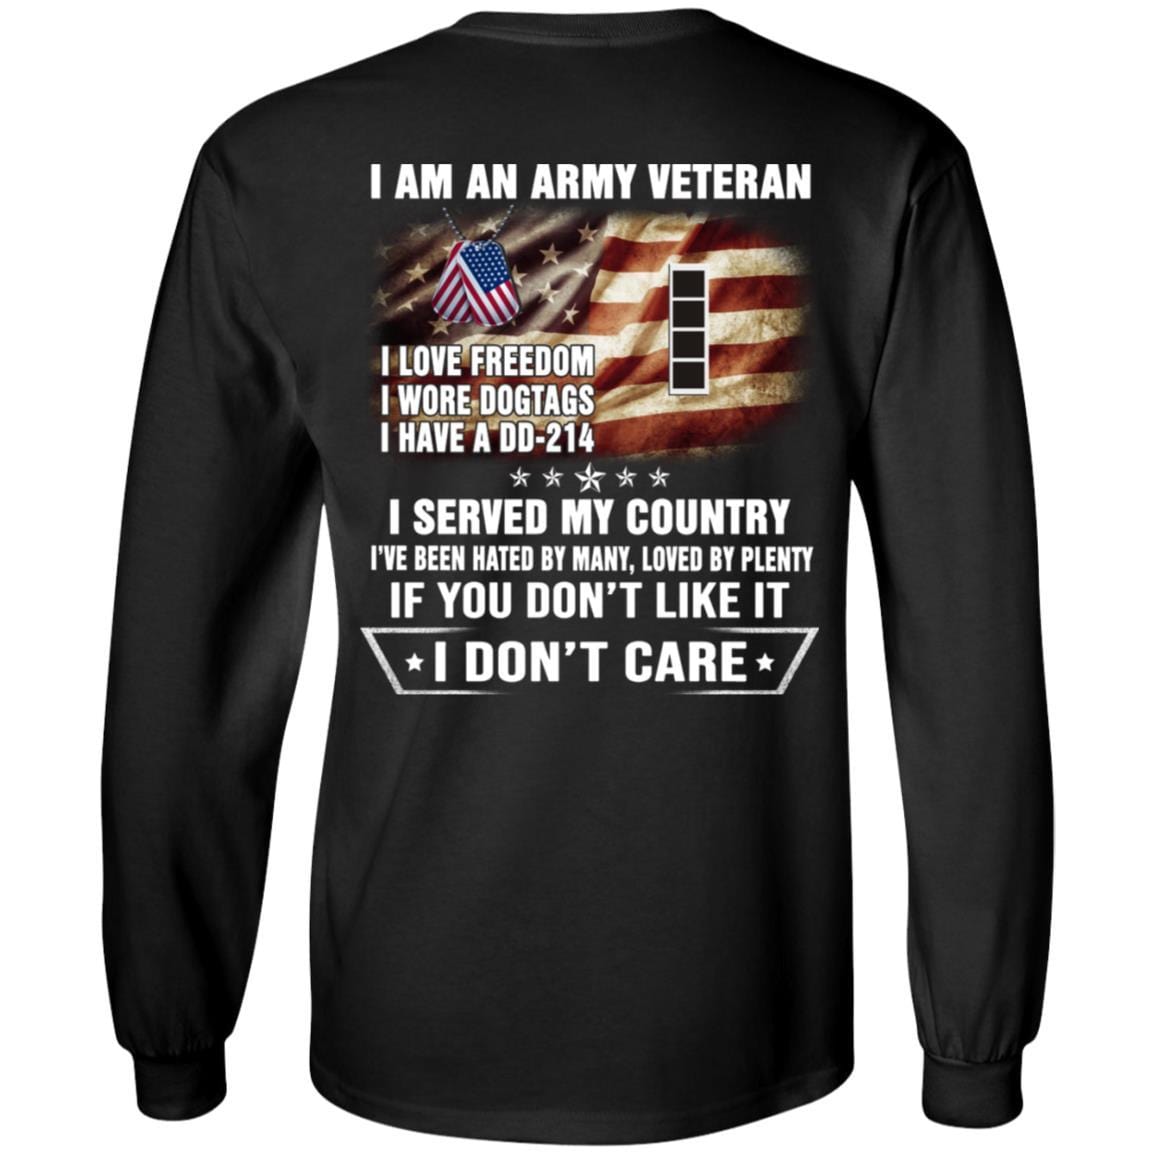 T-Shirt "I Am An Army Veteran" W-4 Chief Warrant Officer 4(CW4)Rank On Back-TShirt-Army-Veterans Nation